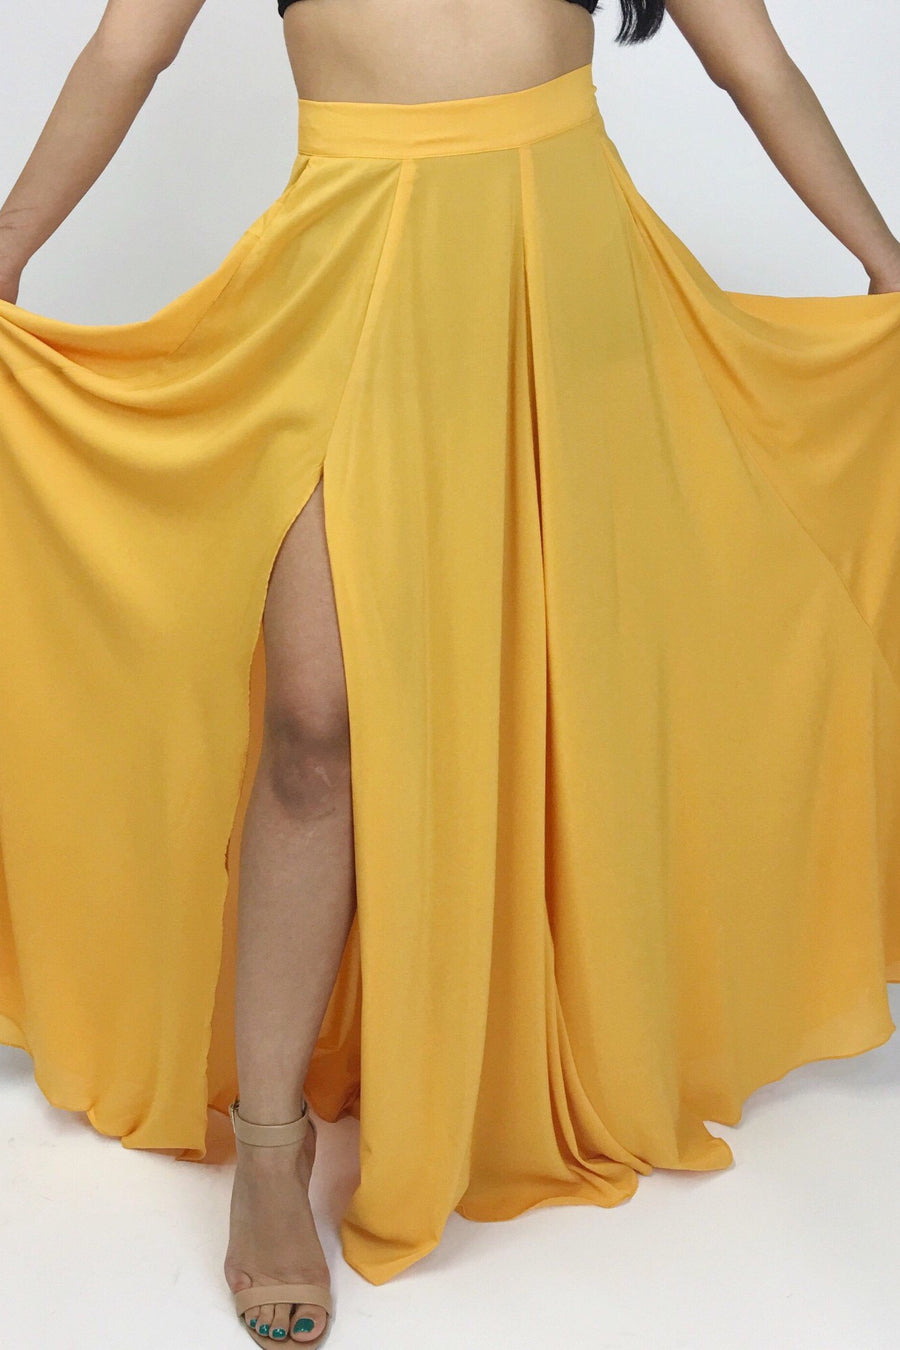 Nicole, long skirt with long slit - Dimesi Boutique